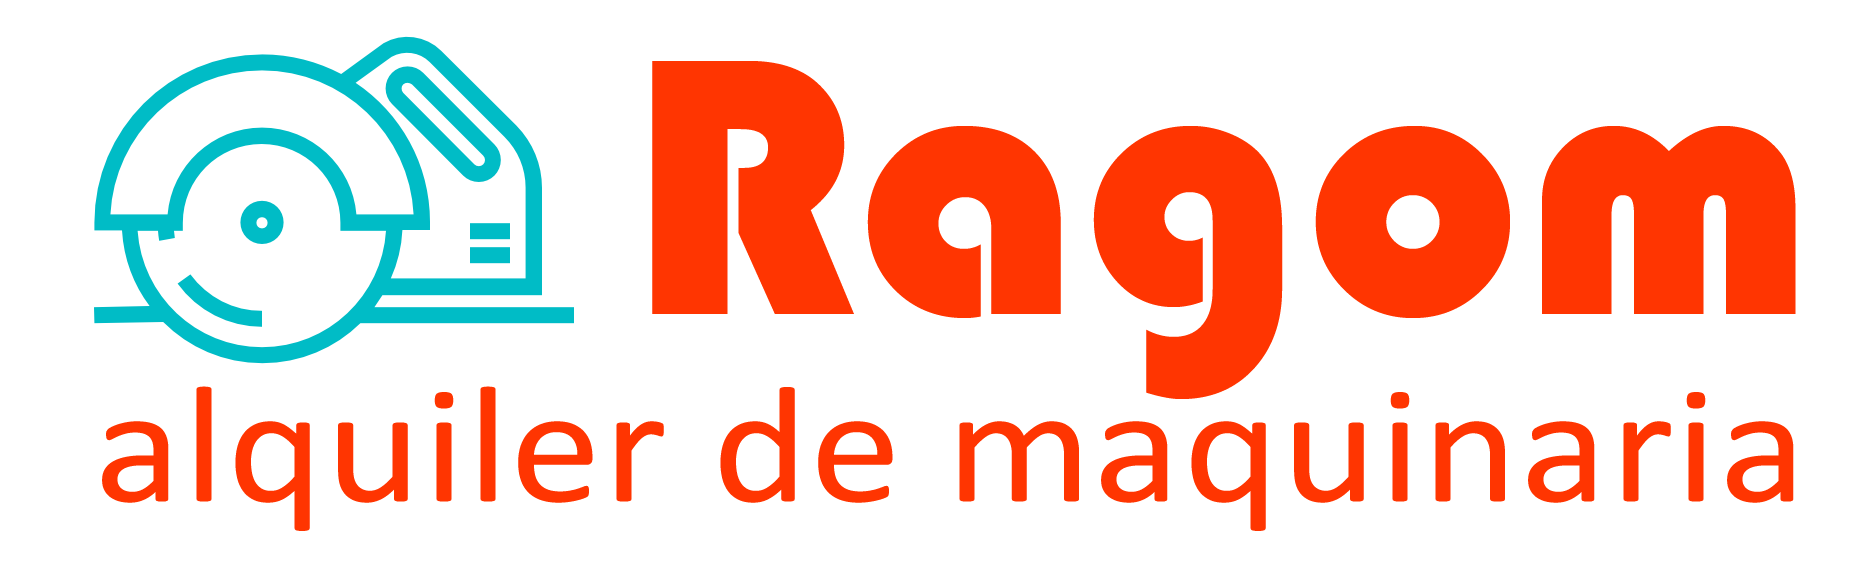 log-ragom-1.png